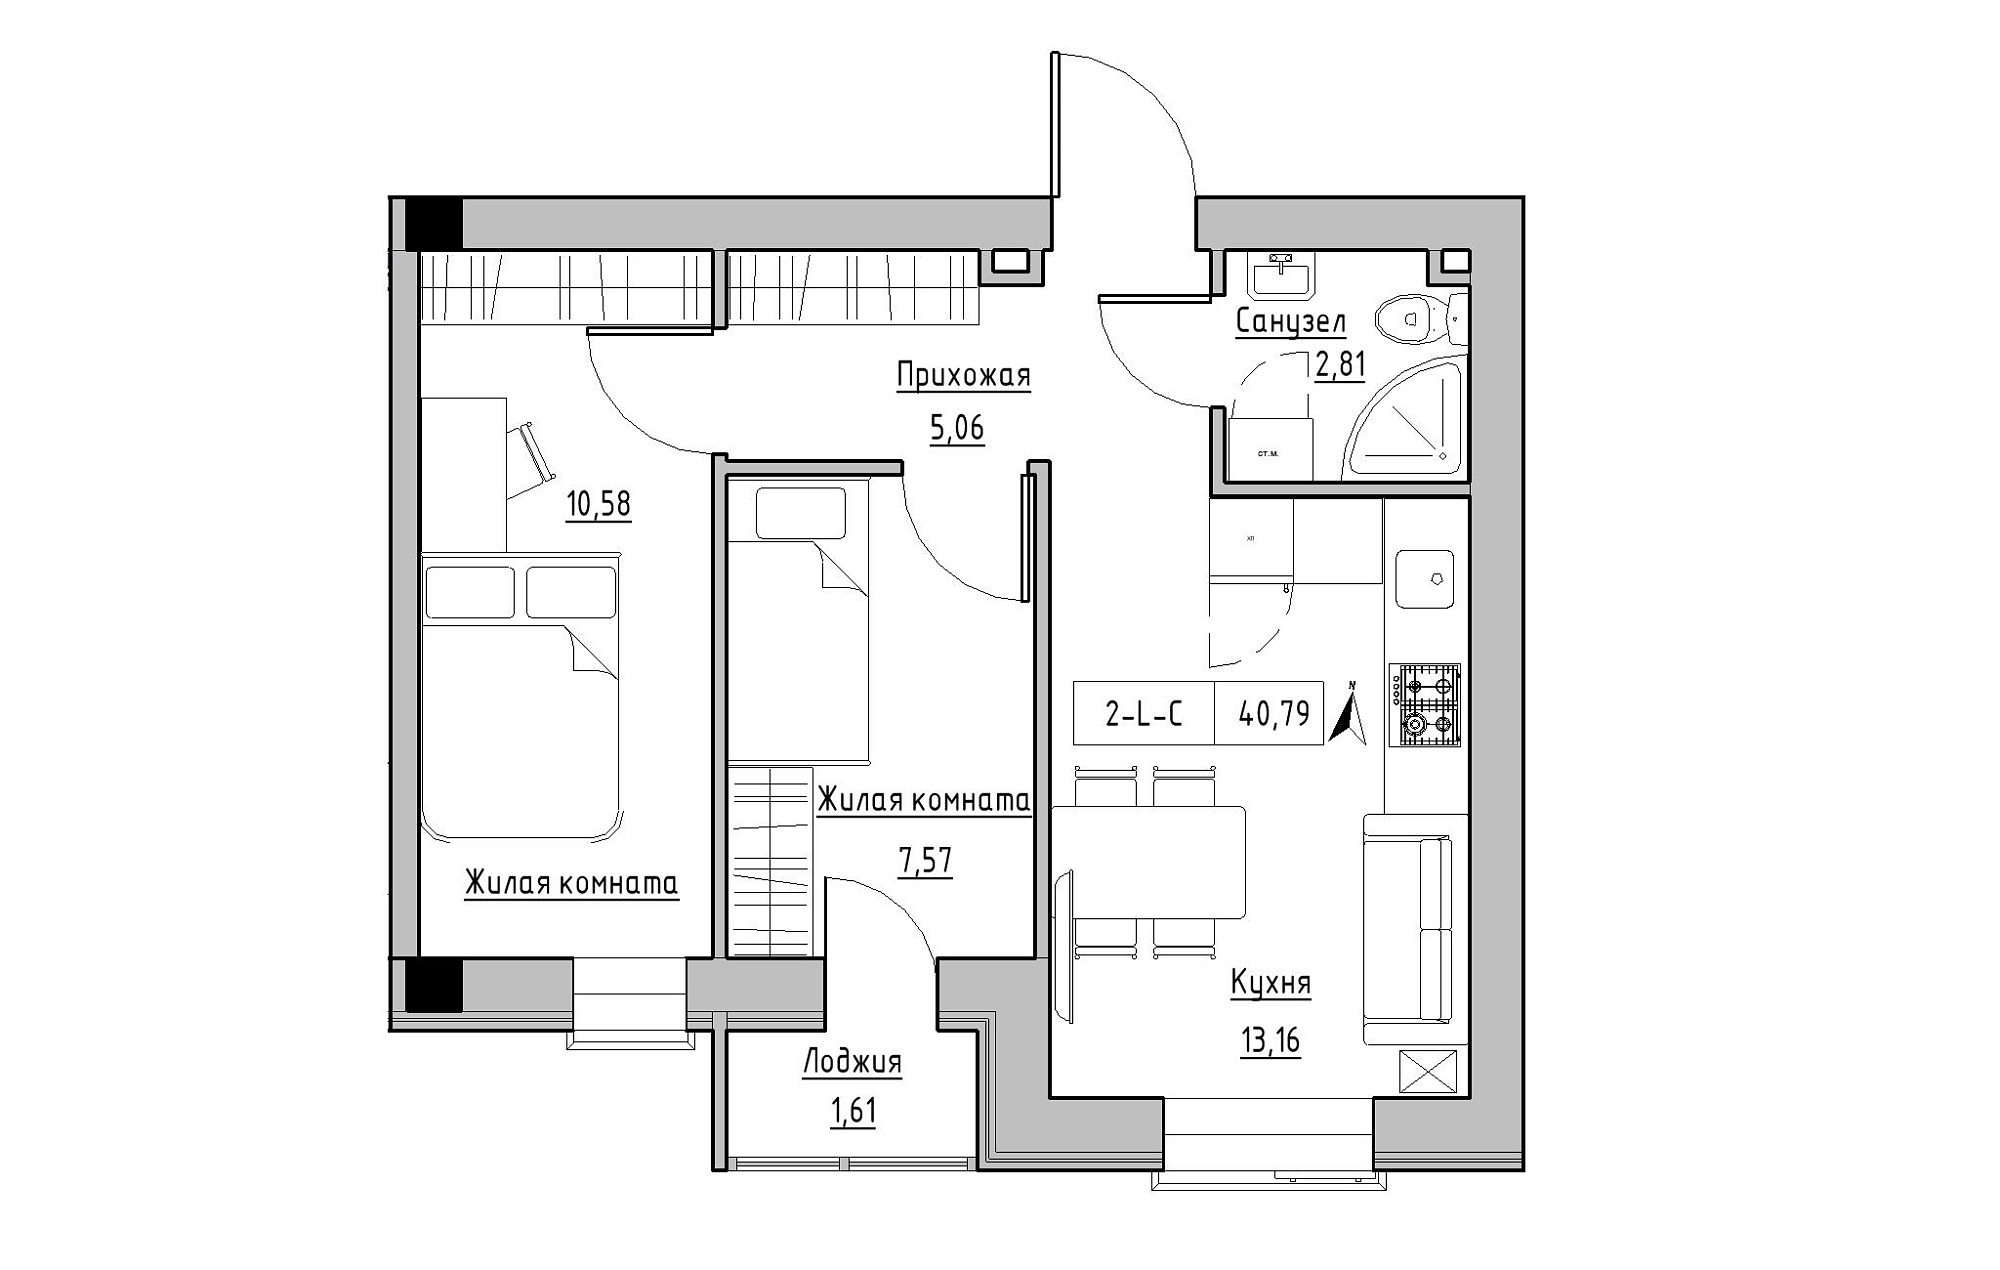 Planning 2-rm flats area 40.79m2, KS-019-01/0011.